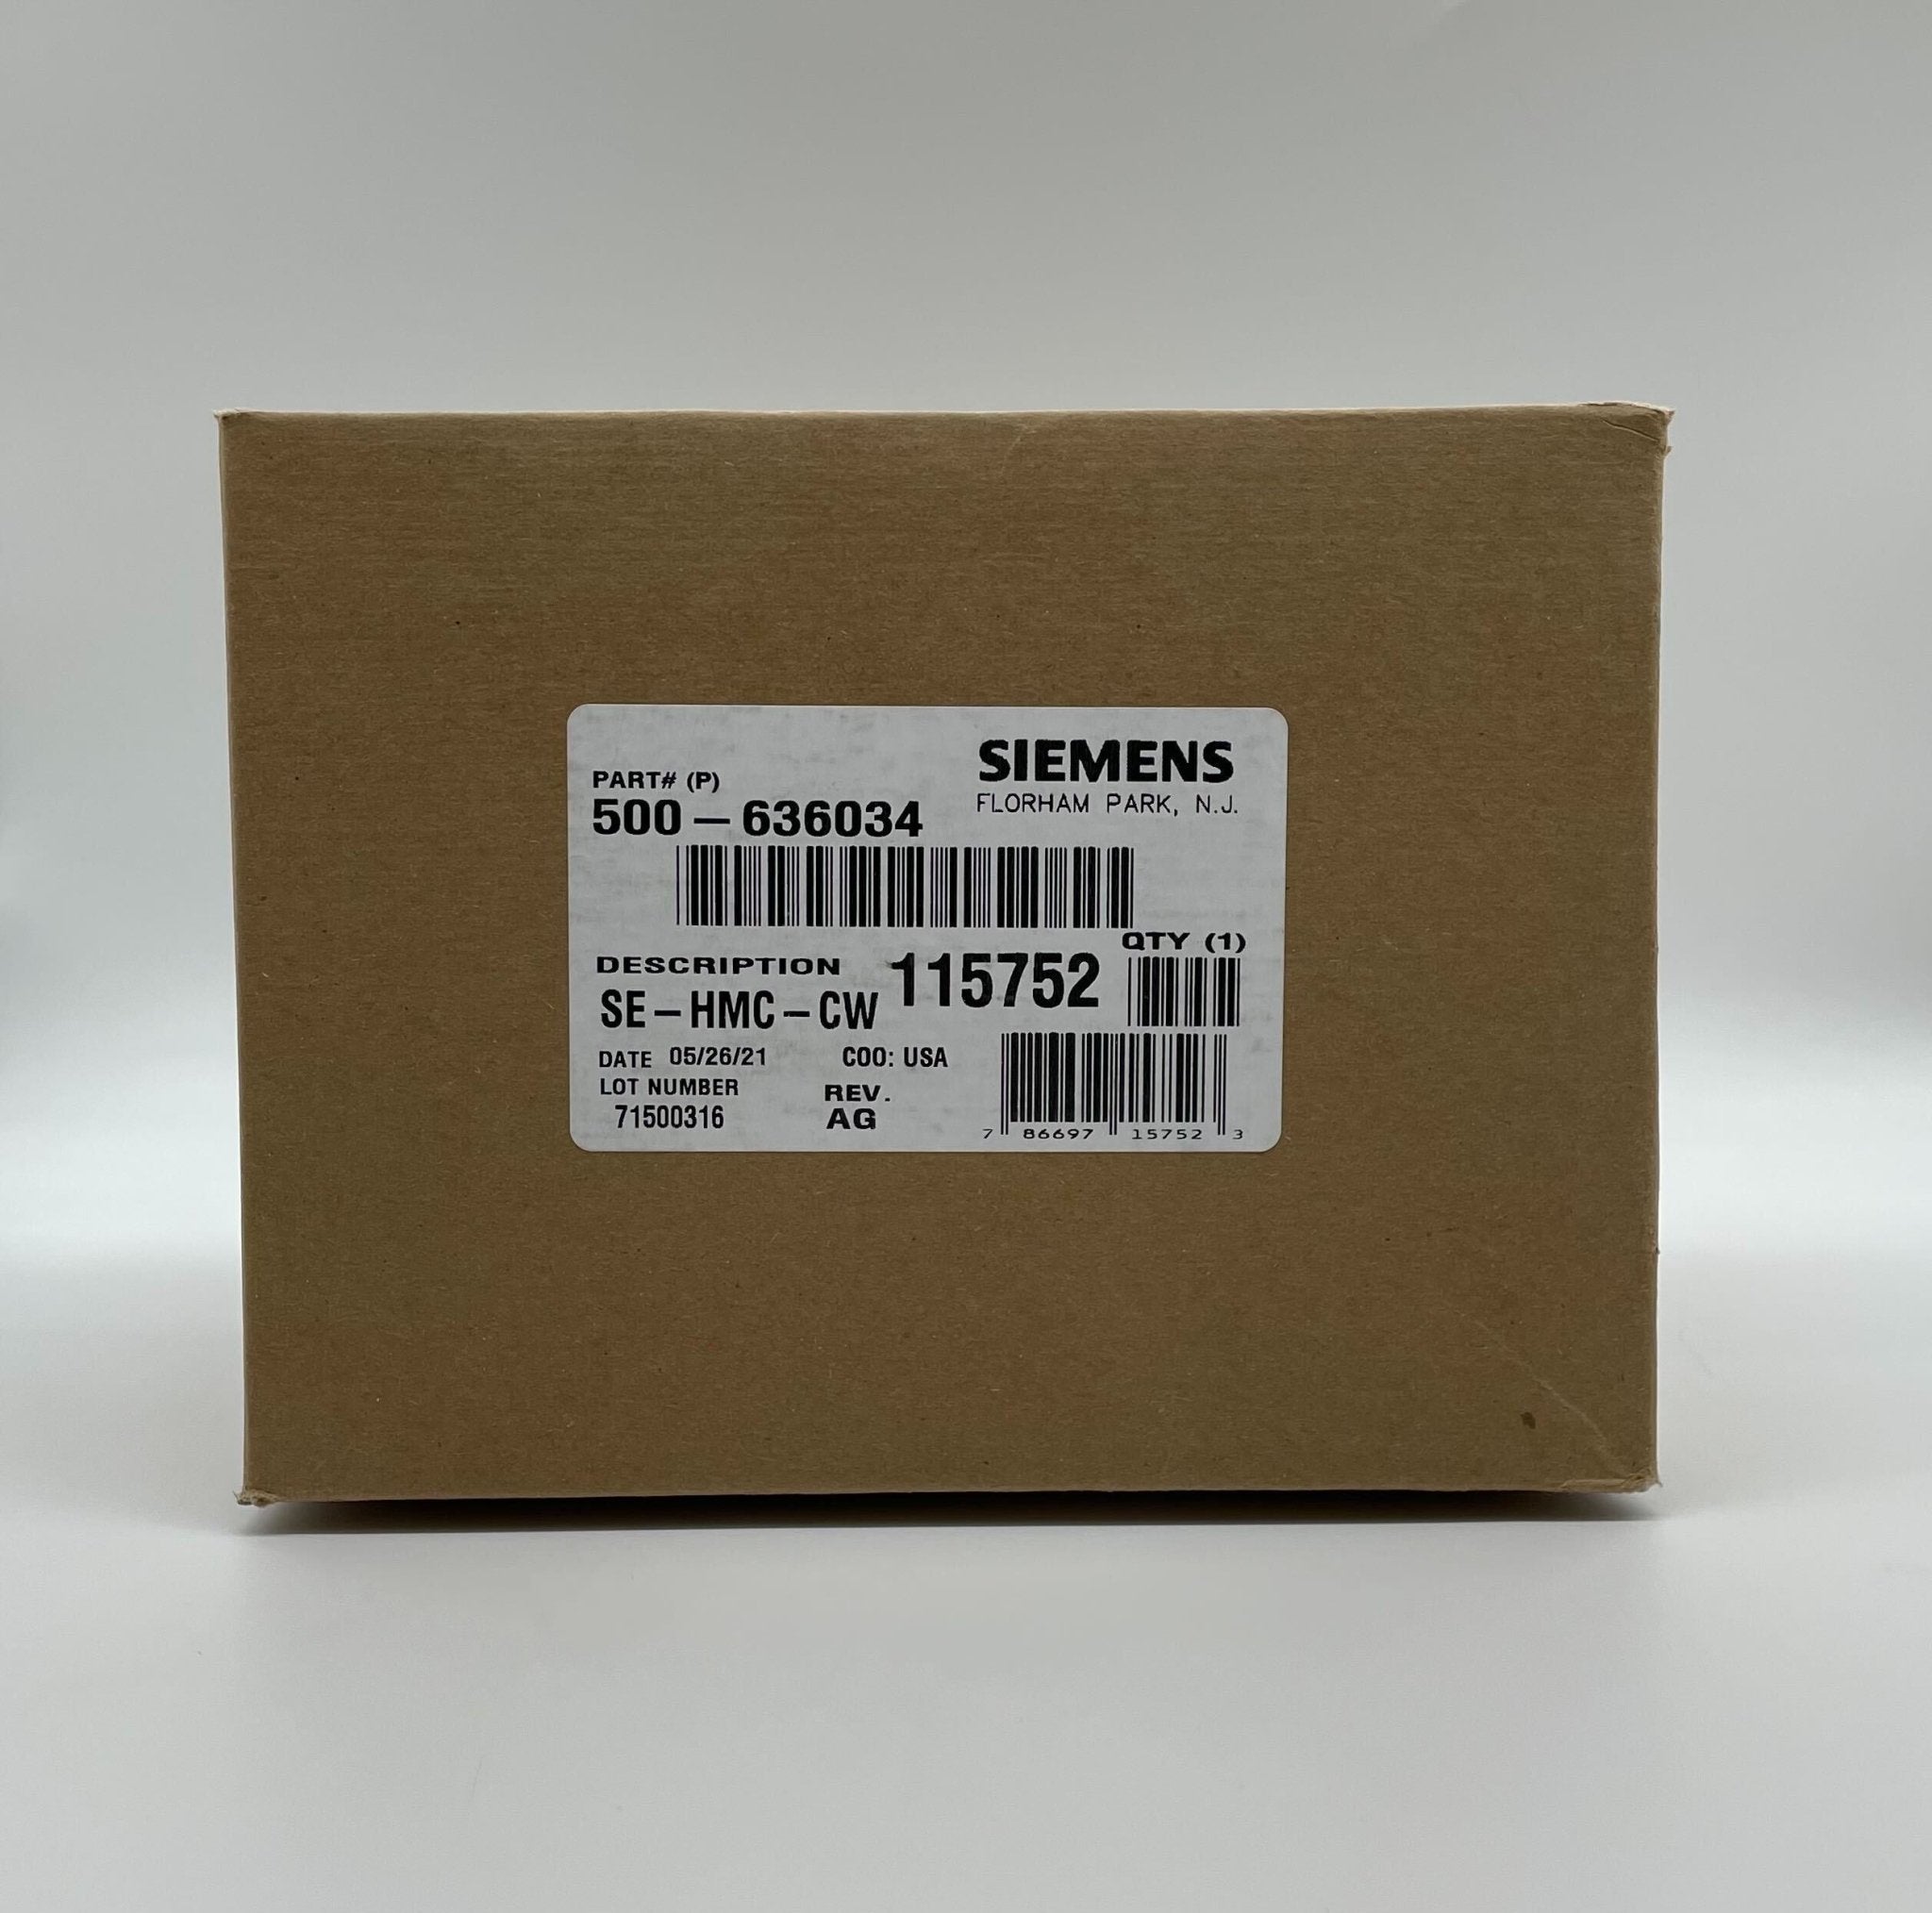 Siemens SE-HMC-CW - The Fire Alarm Supplier